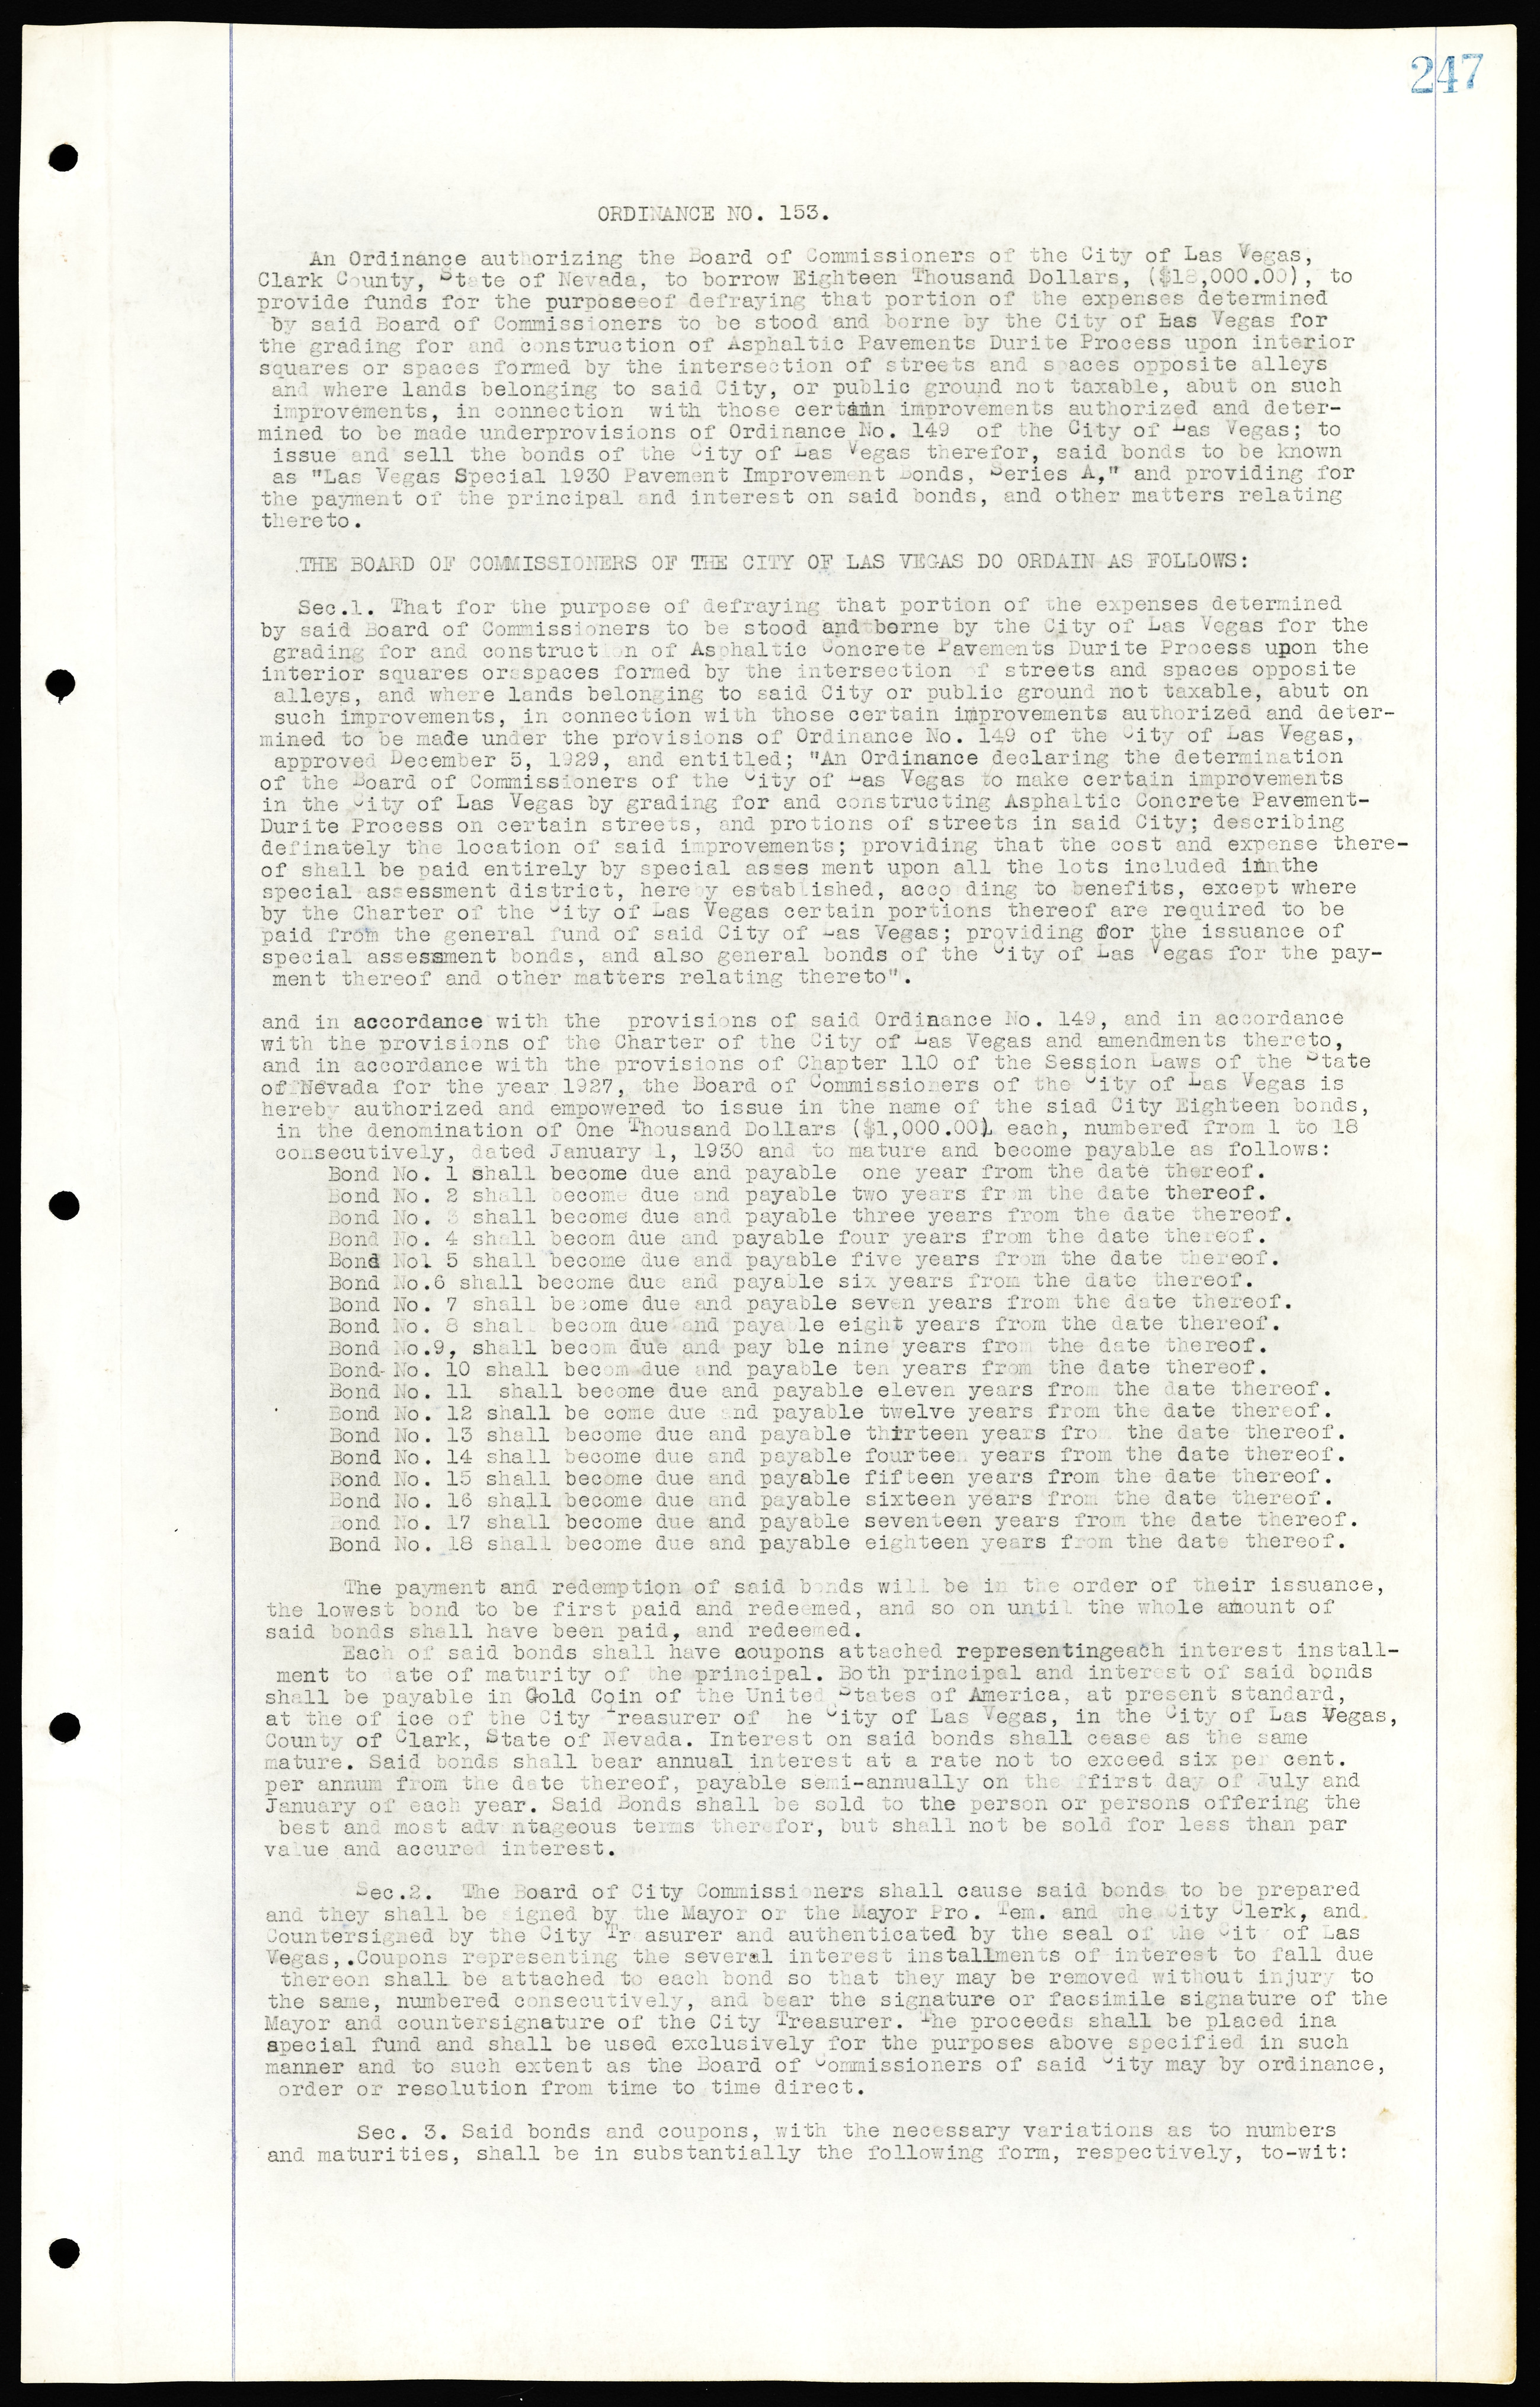 Las Vegas City Ordinances, July 18, 1911 to March 31, 1933, lvc000013-251